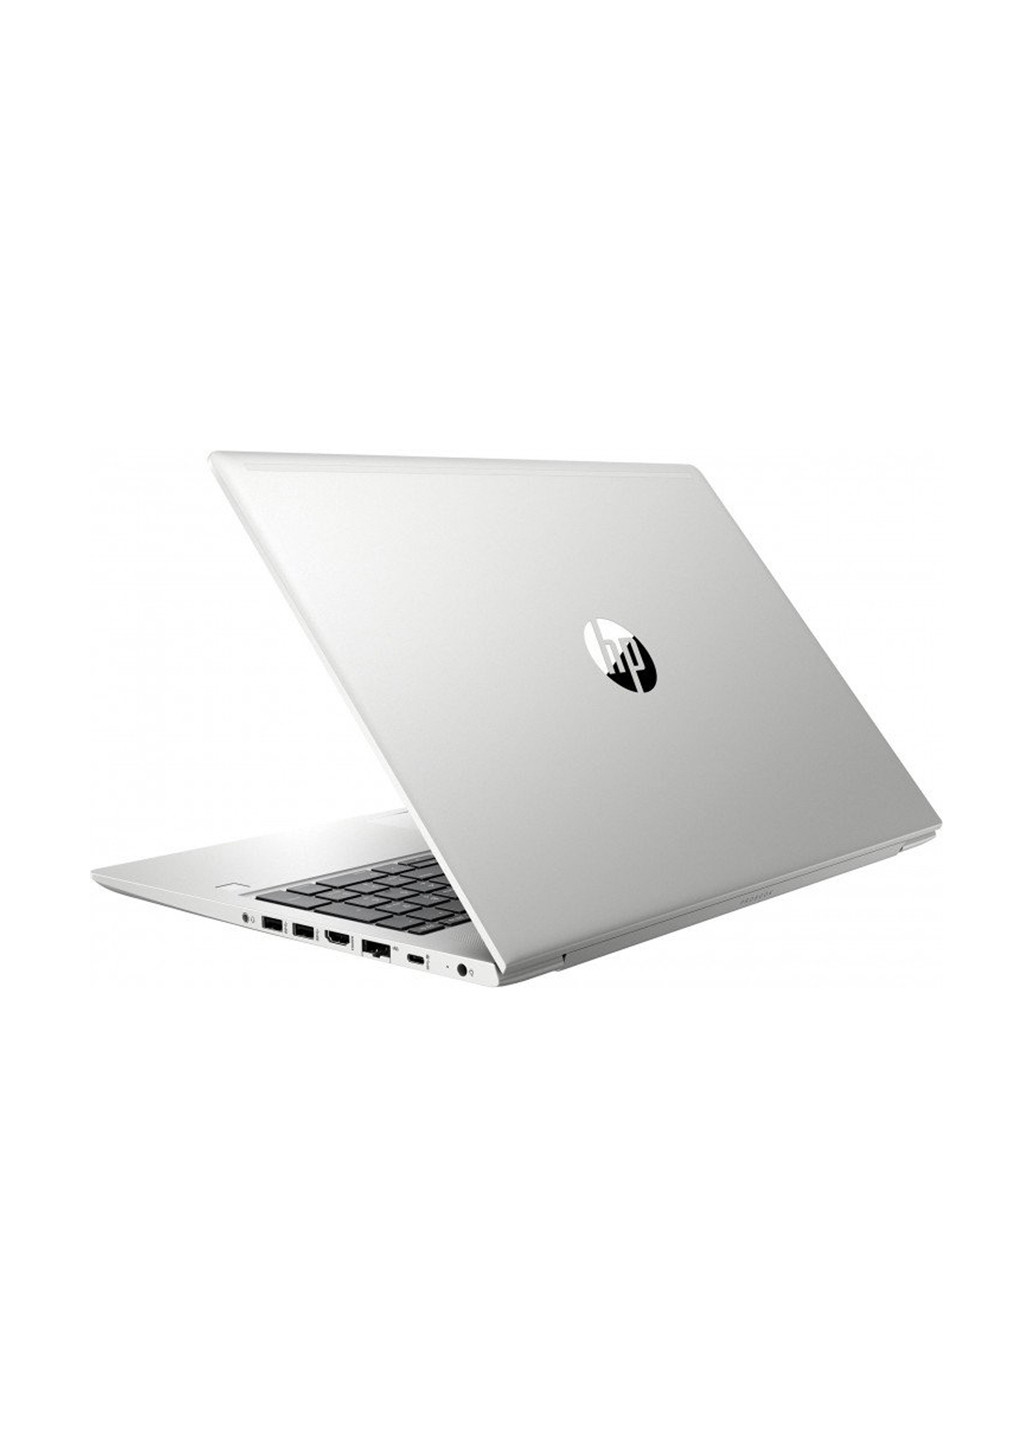 Ноутбук HP probook 450 g6 (4sz47av_v25) silver (173921869)